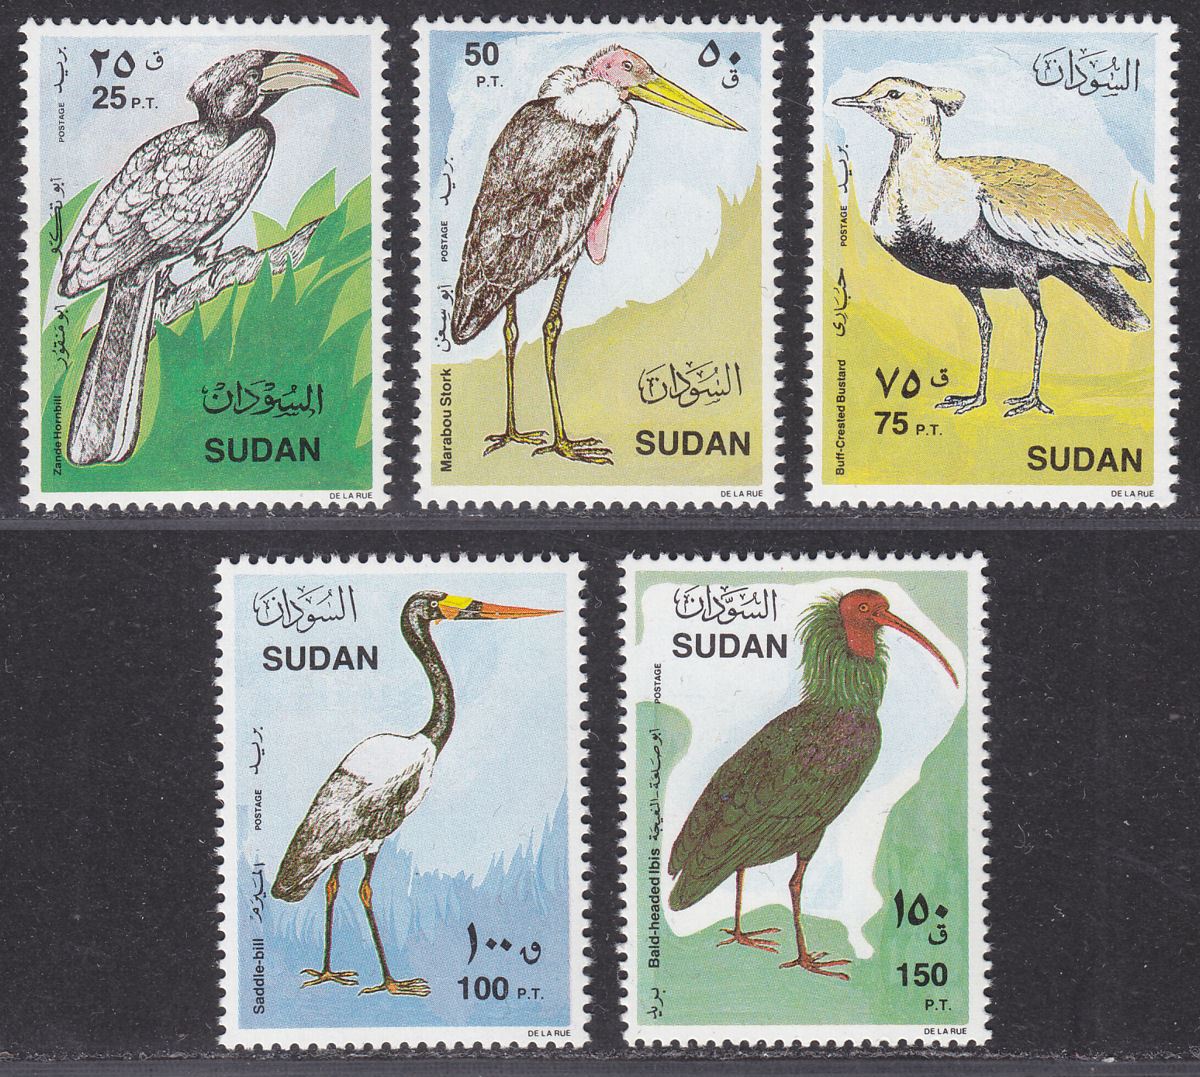 Sudan 1990 Birds Set UM Mint SG458-462 cat £13 MNH